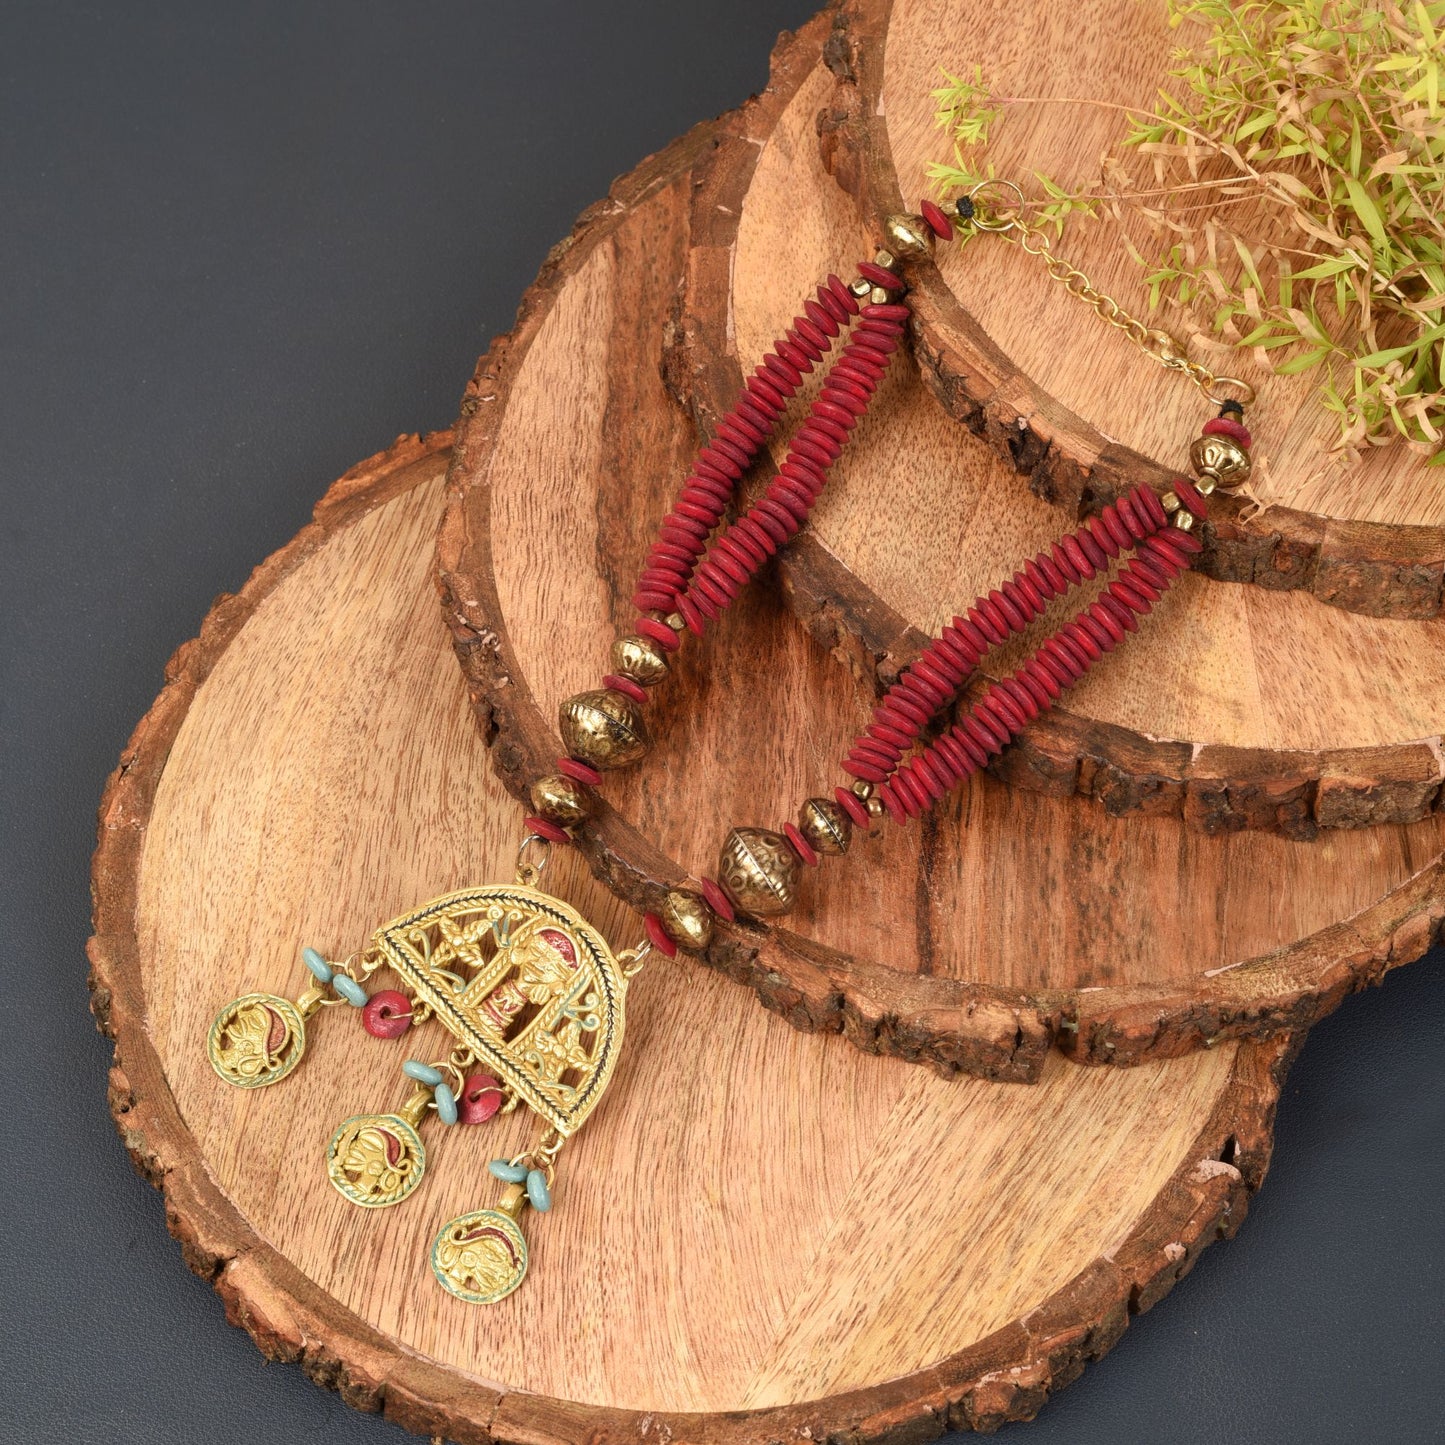 The Queen's Loop Handcrafted Tribal Necklace